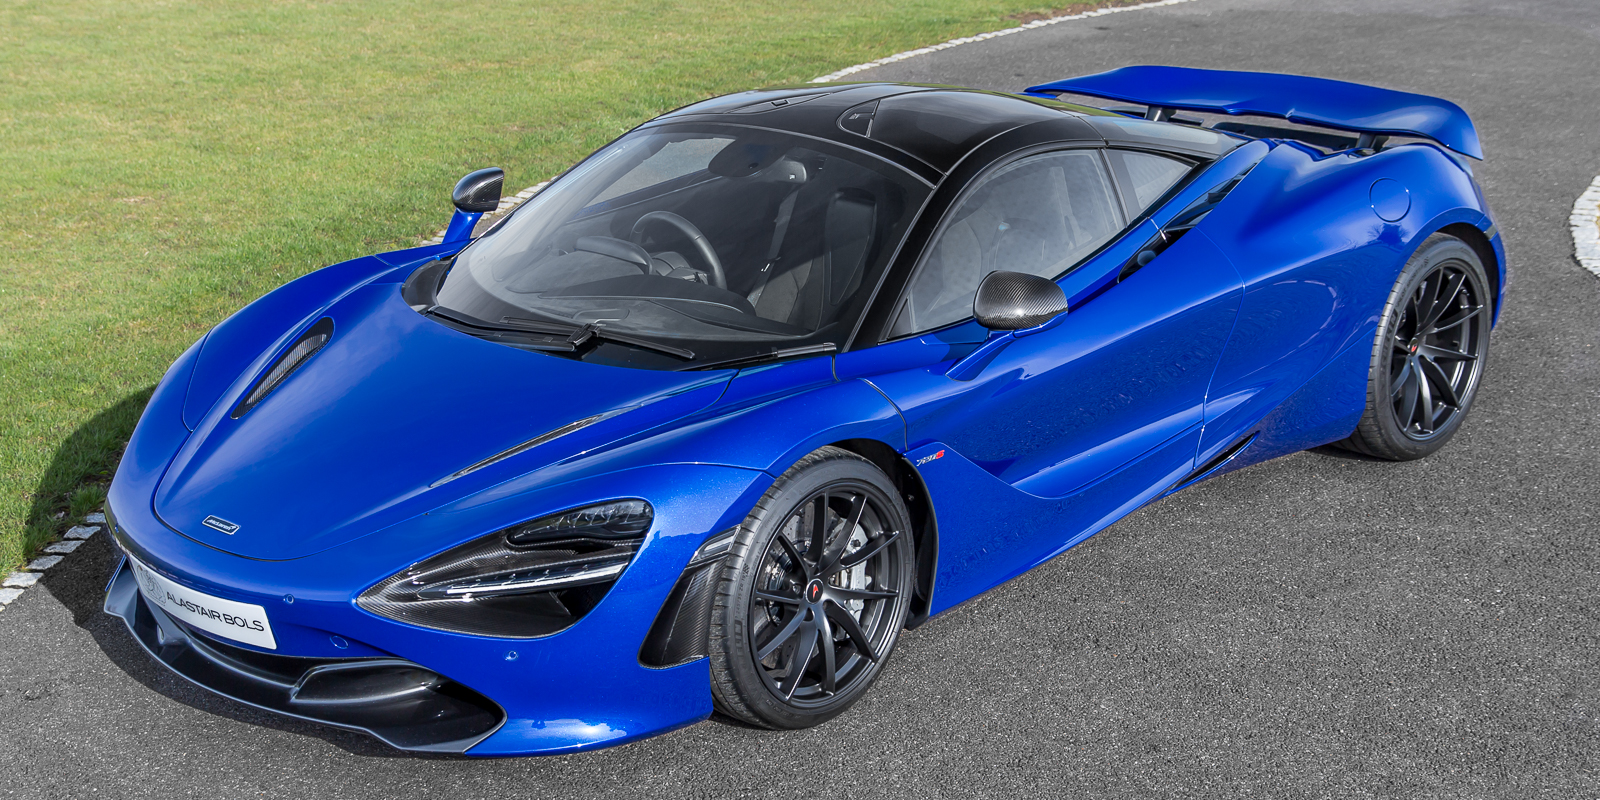 McLaren-720S-Performance-Aurora-Blue-for-sale-1-of-1.jpg